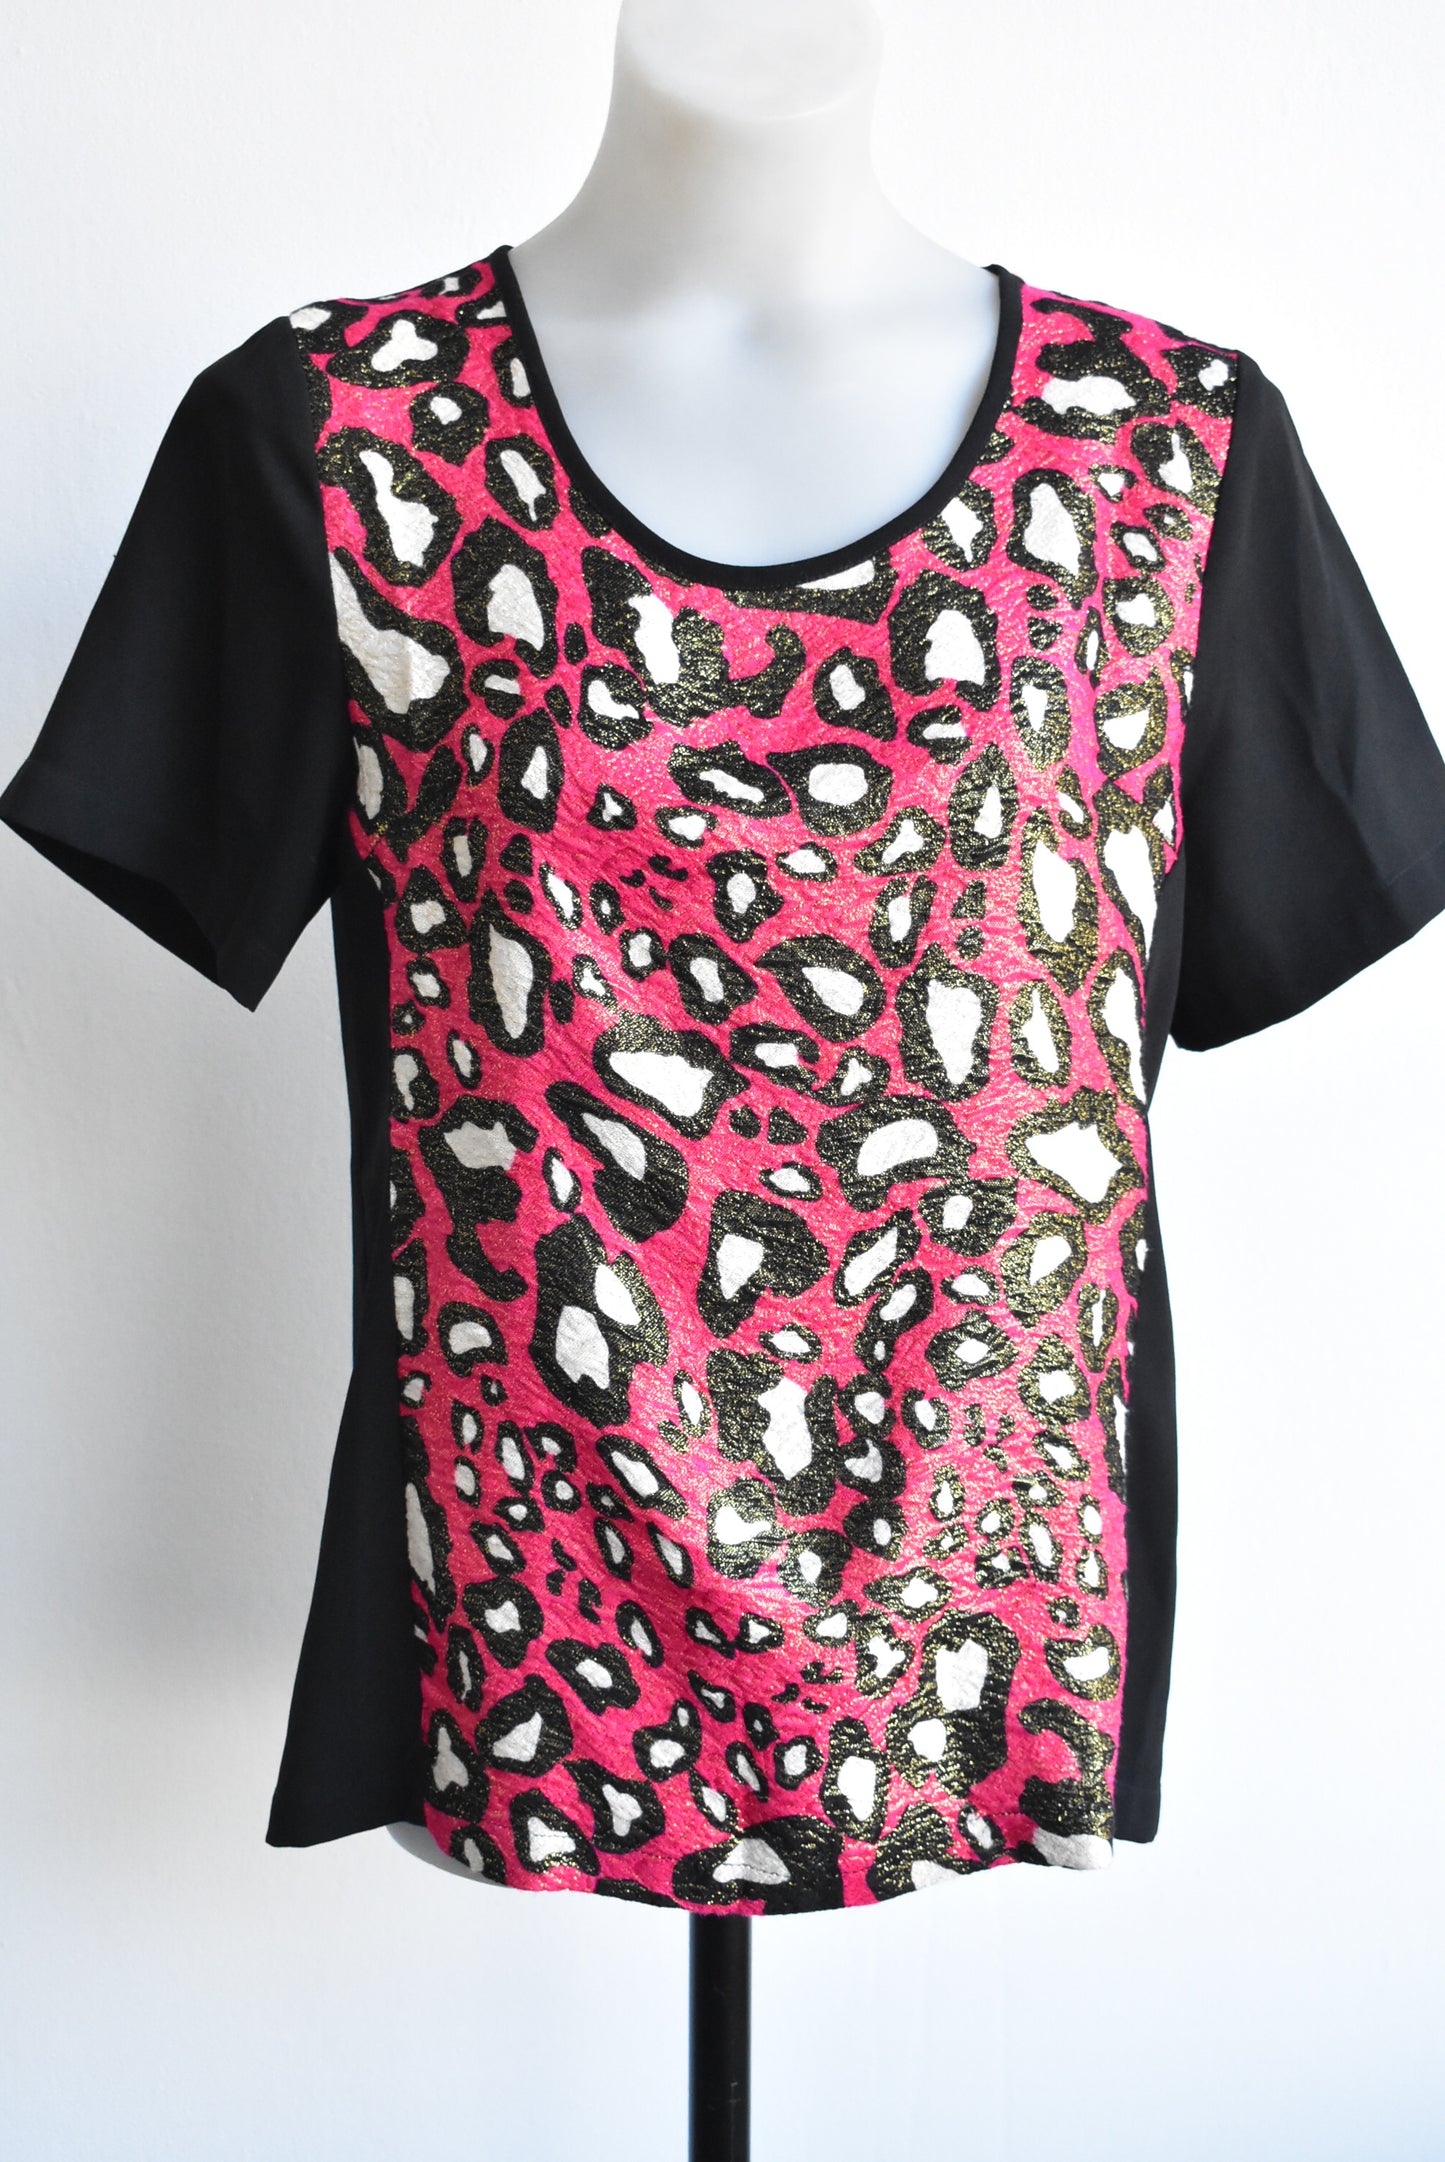 Erina Emery pink leopard print top, size 8